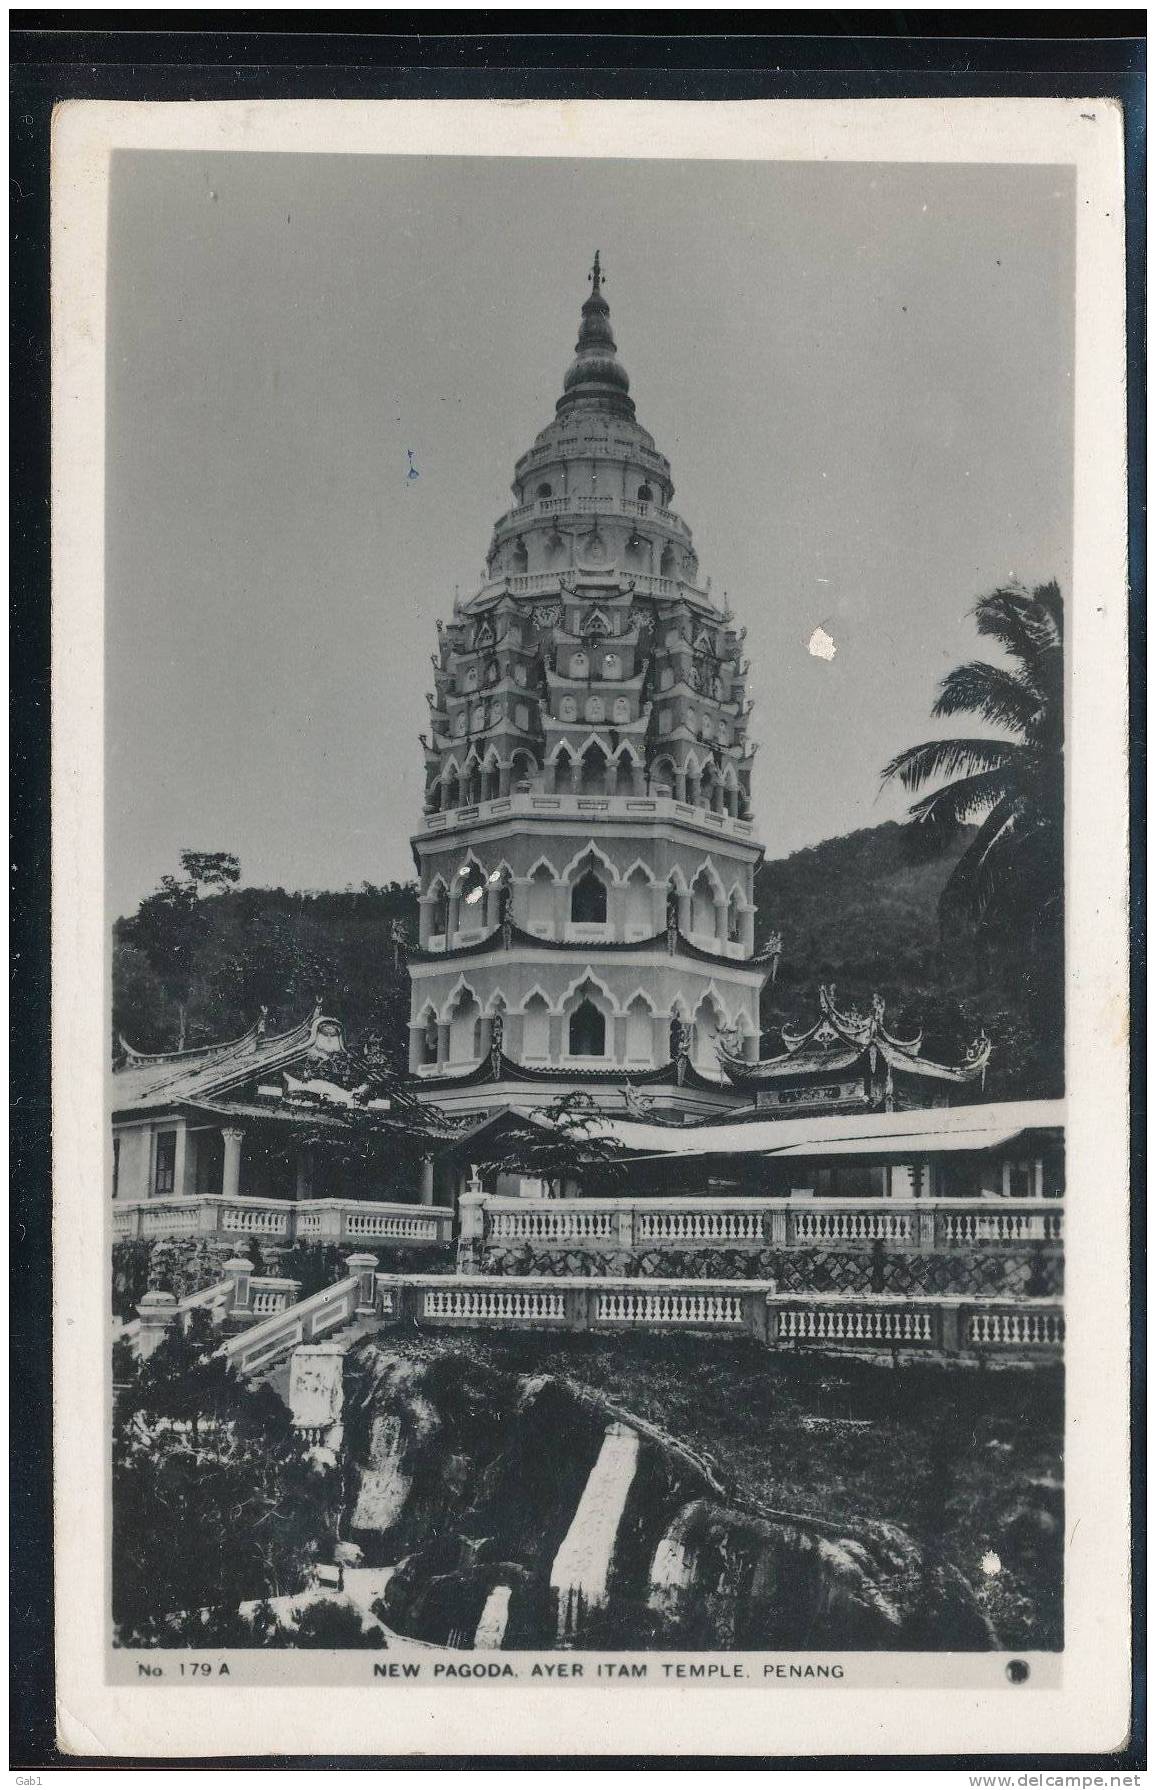 New Pagoda Ayer Itam Temple Penang - Malaysia